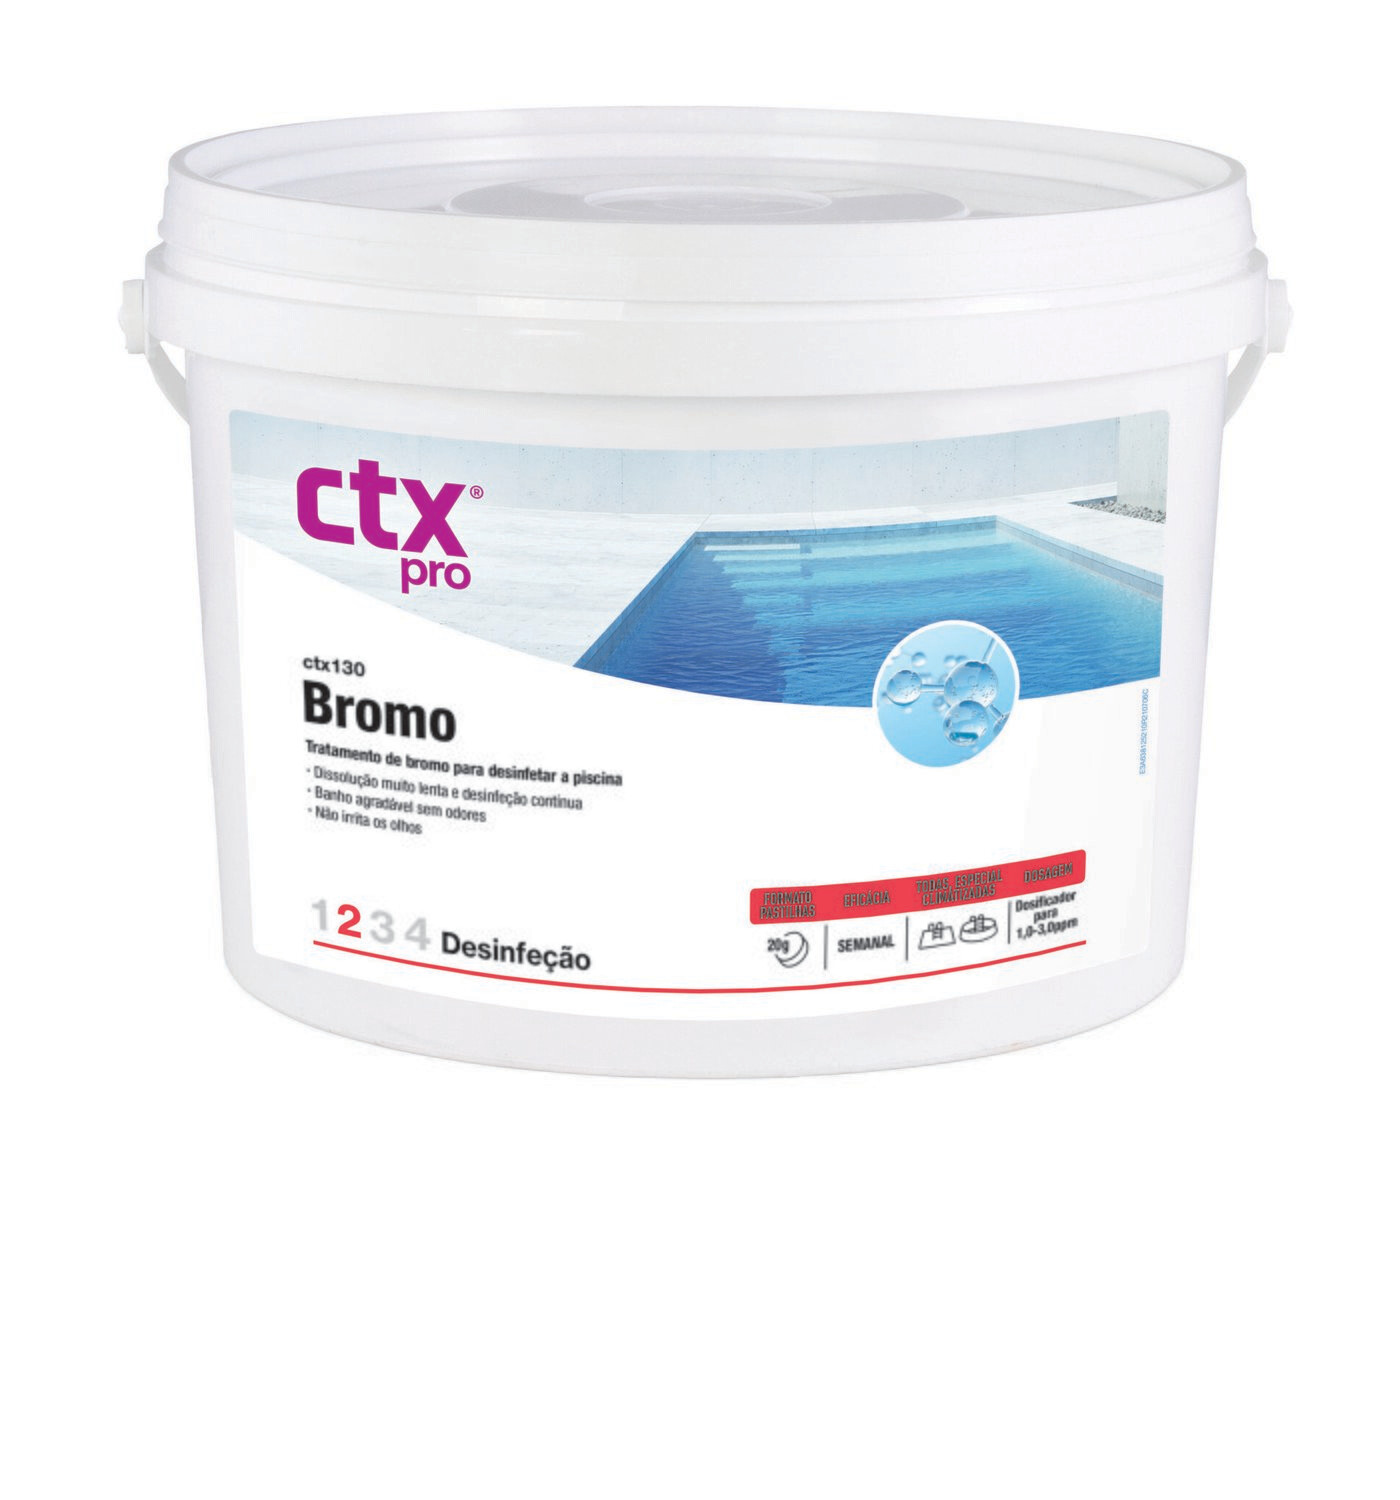 Bromo 130 CTX